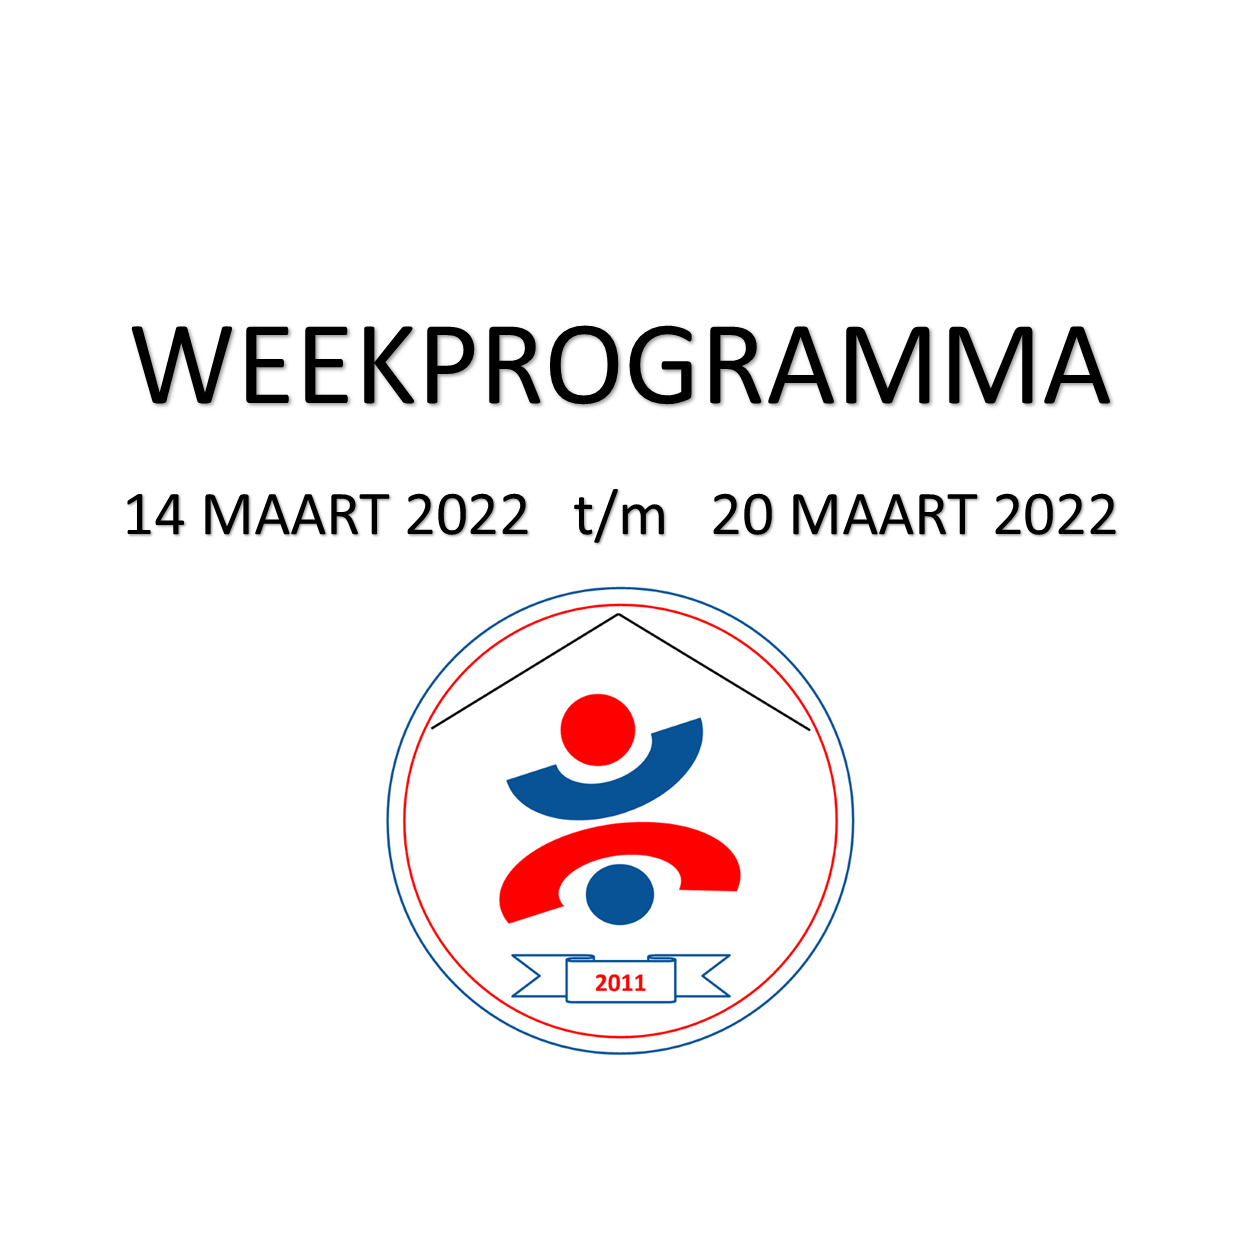 Weekprogramma, maandag 14 maart t/m zondag 20 maart 2022